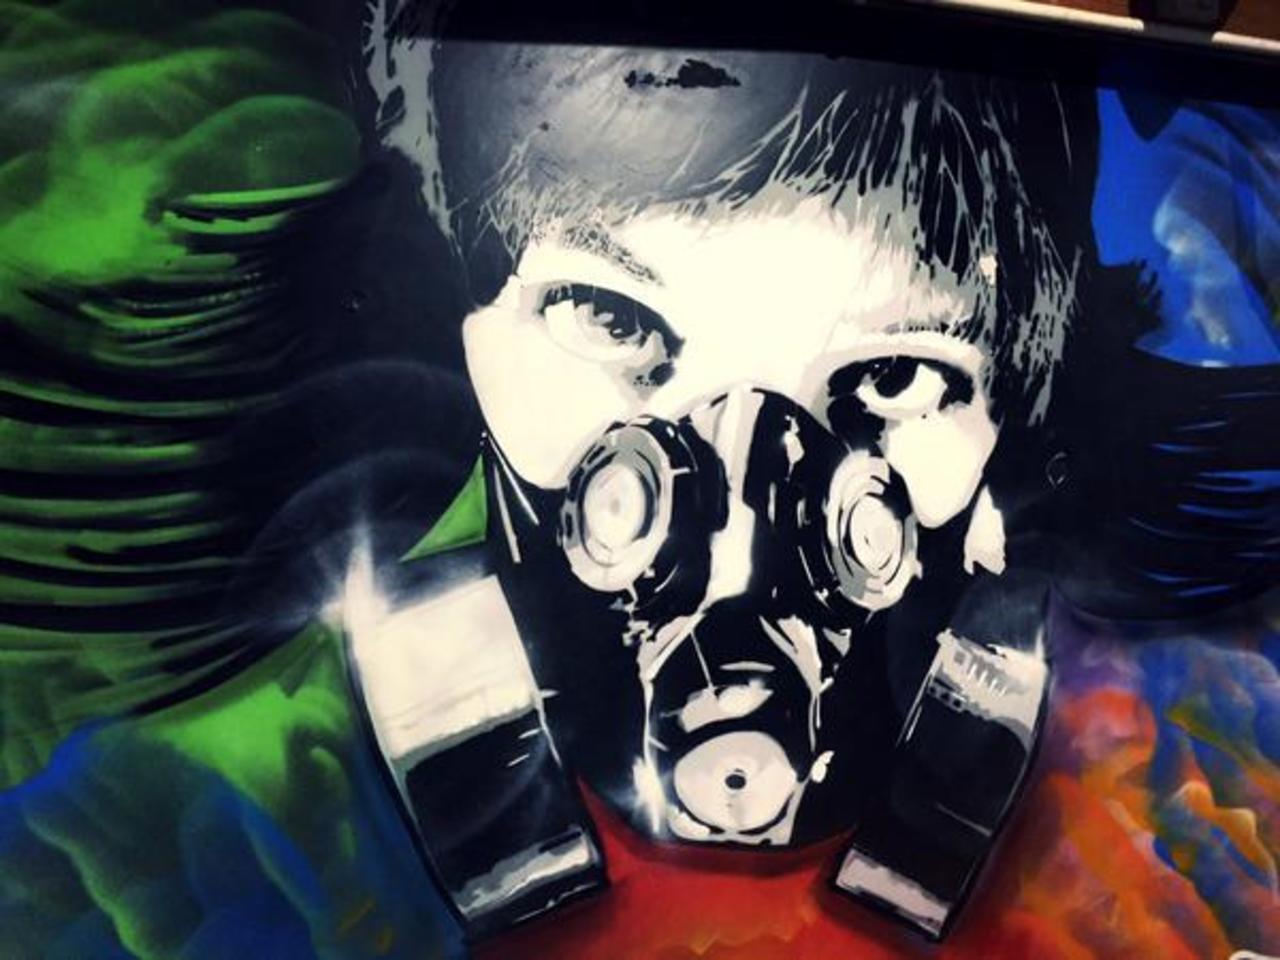 Gas mask #stencil art in Bangor, Norrthern Ireland via @viswaste #streetart #graffiti #mural #urbanart #spraypaint http://t.co/9DYaTP92CO